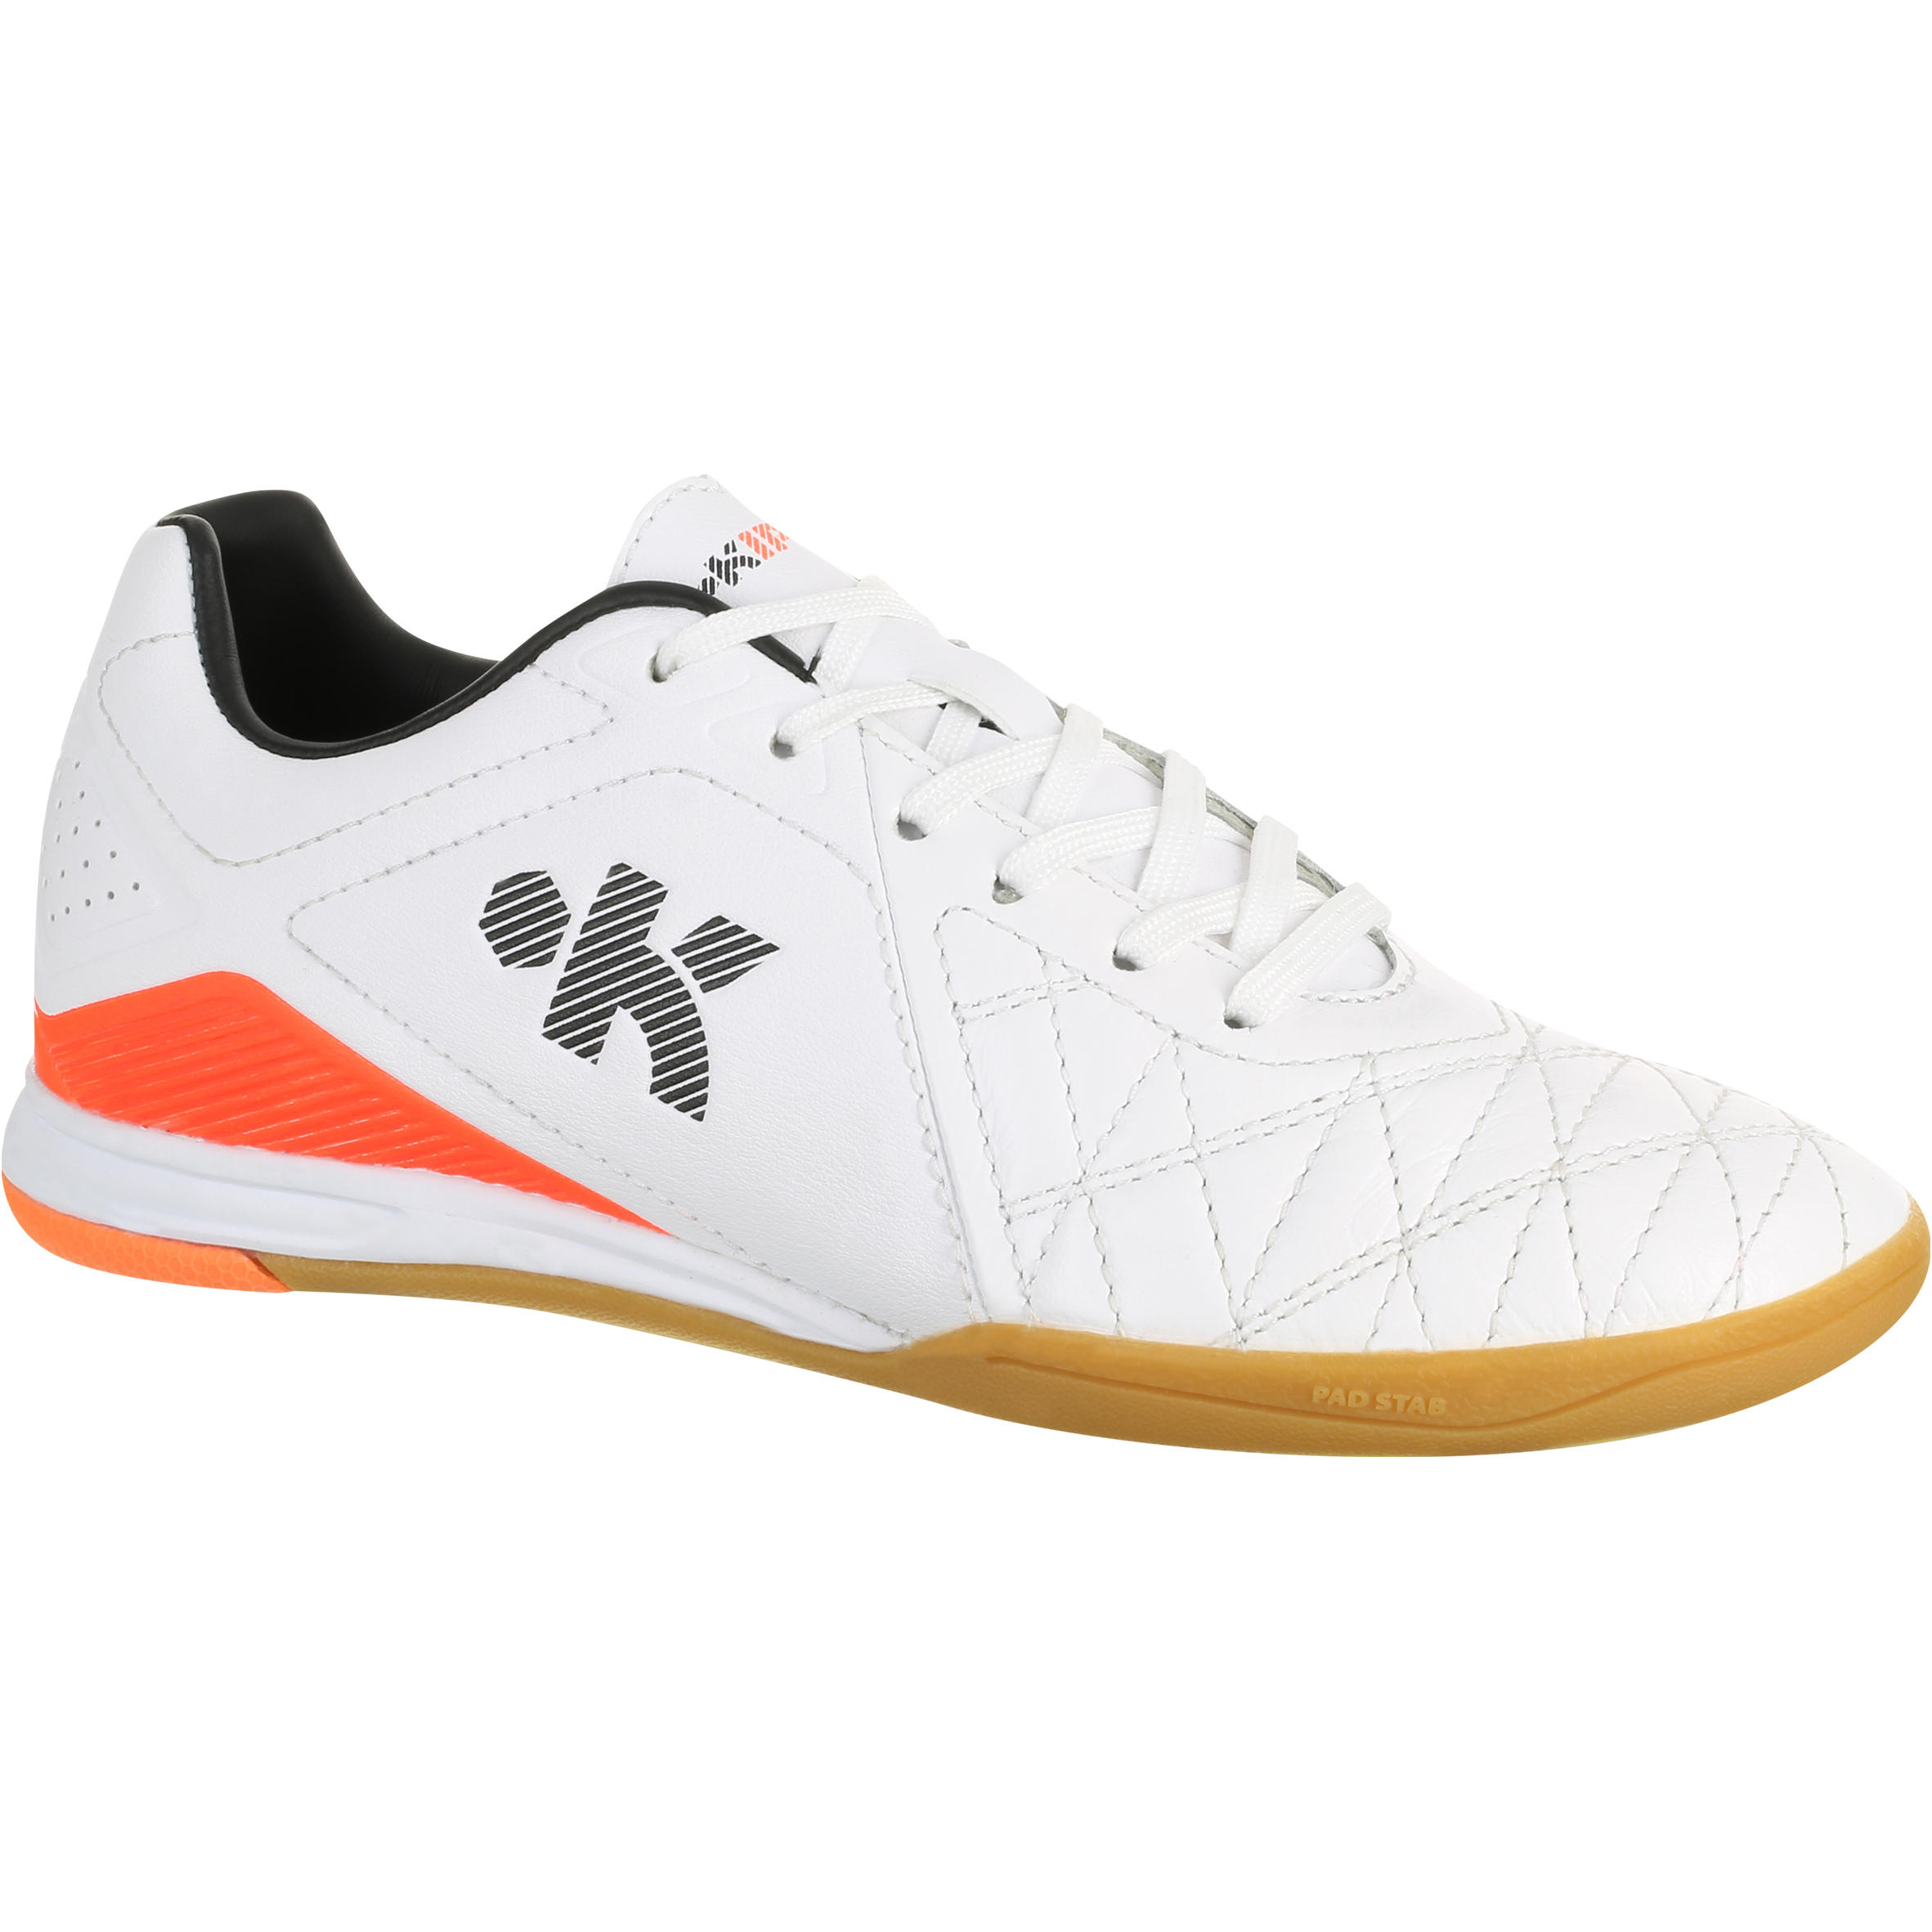 KIPSTA Agility 700 Junior Futsal Trainers - White Orange